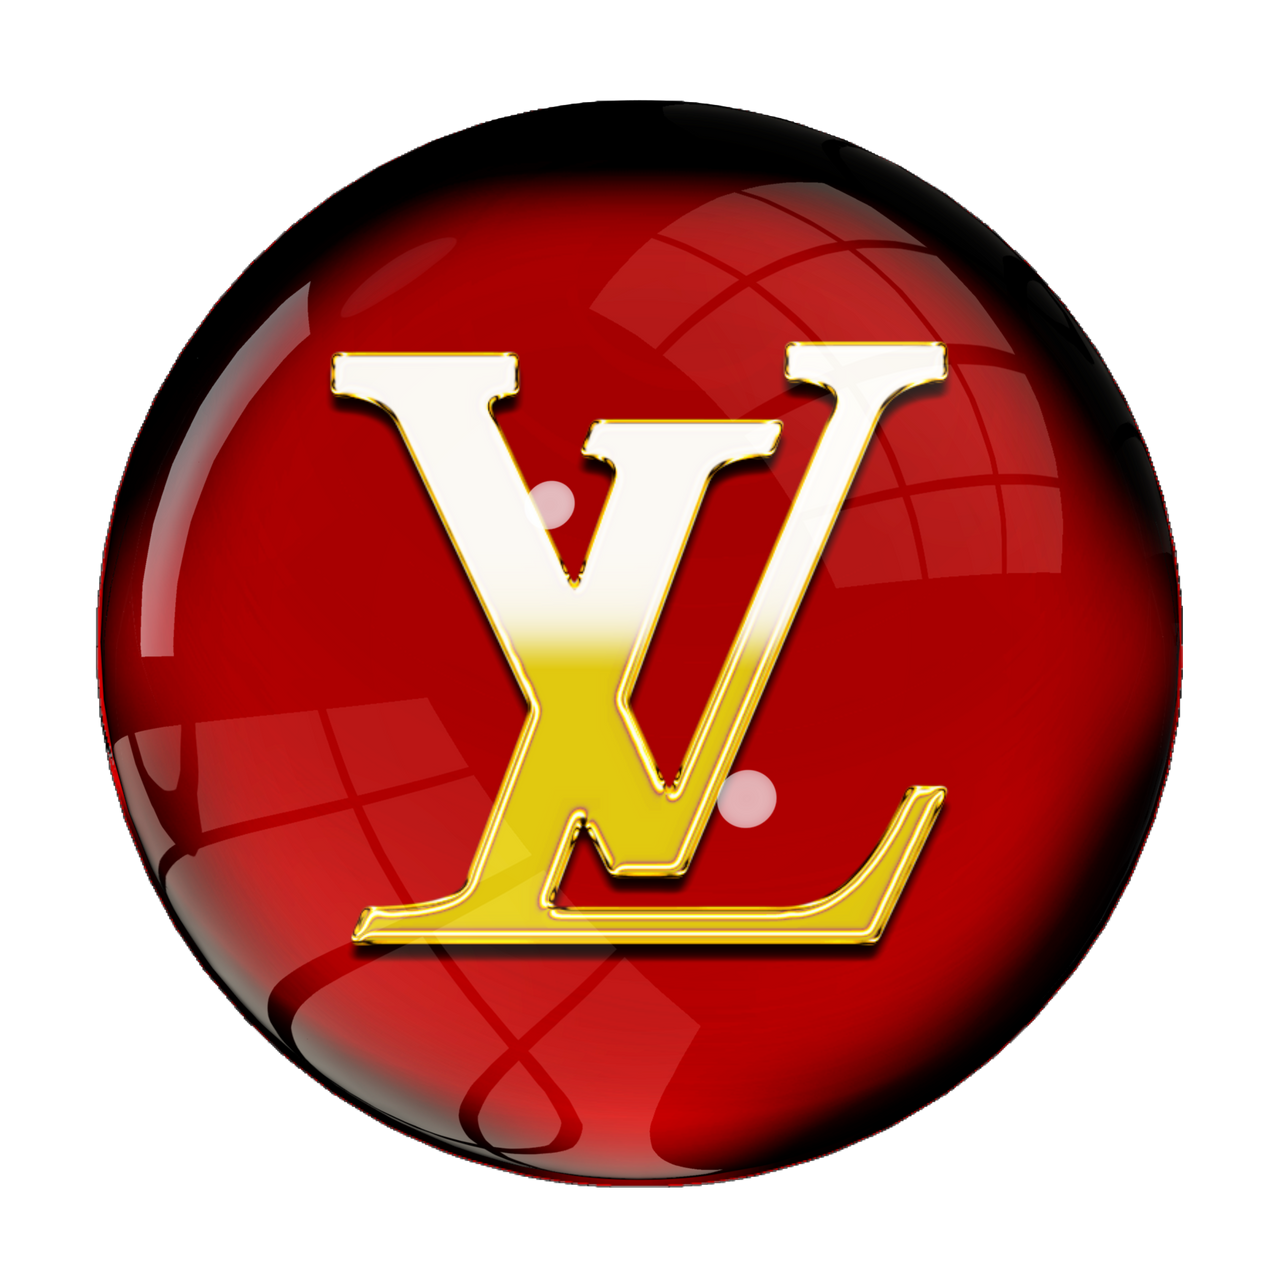 Louis Vuitton Logo Alphabet - N by TeVesMuyNerviosa on DeviantArt